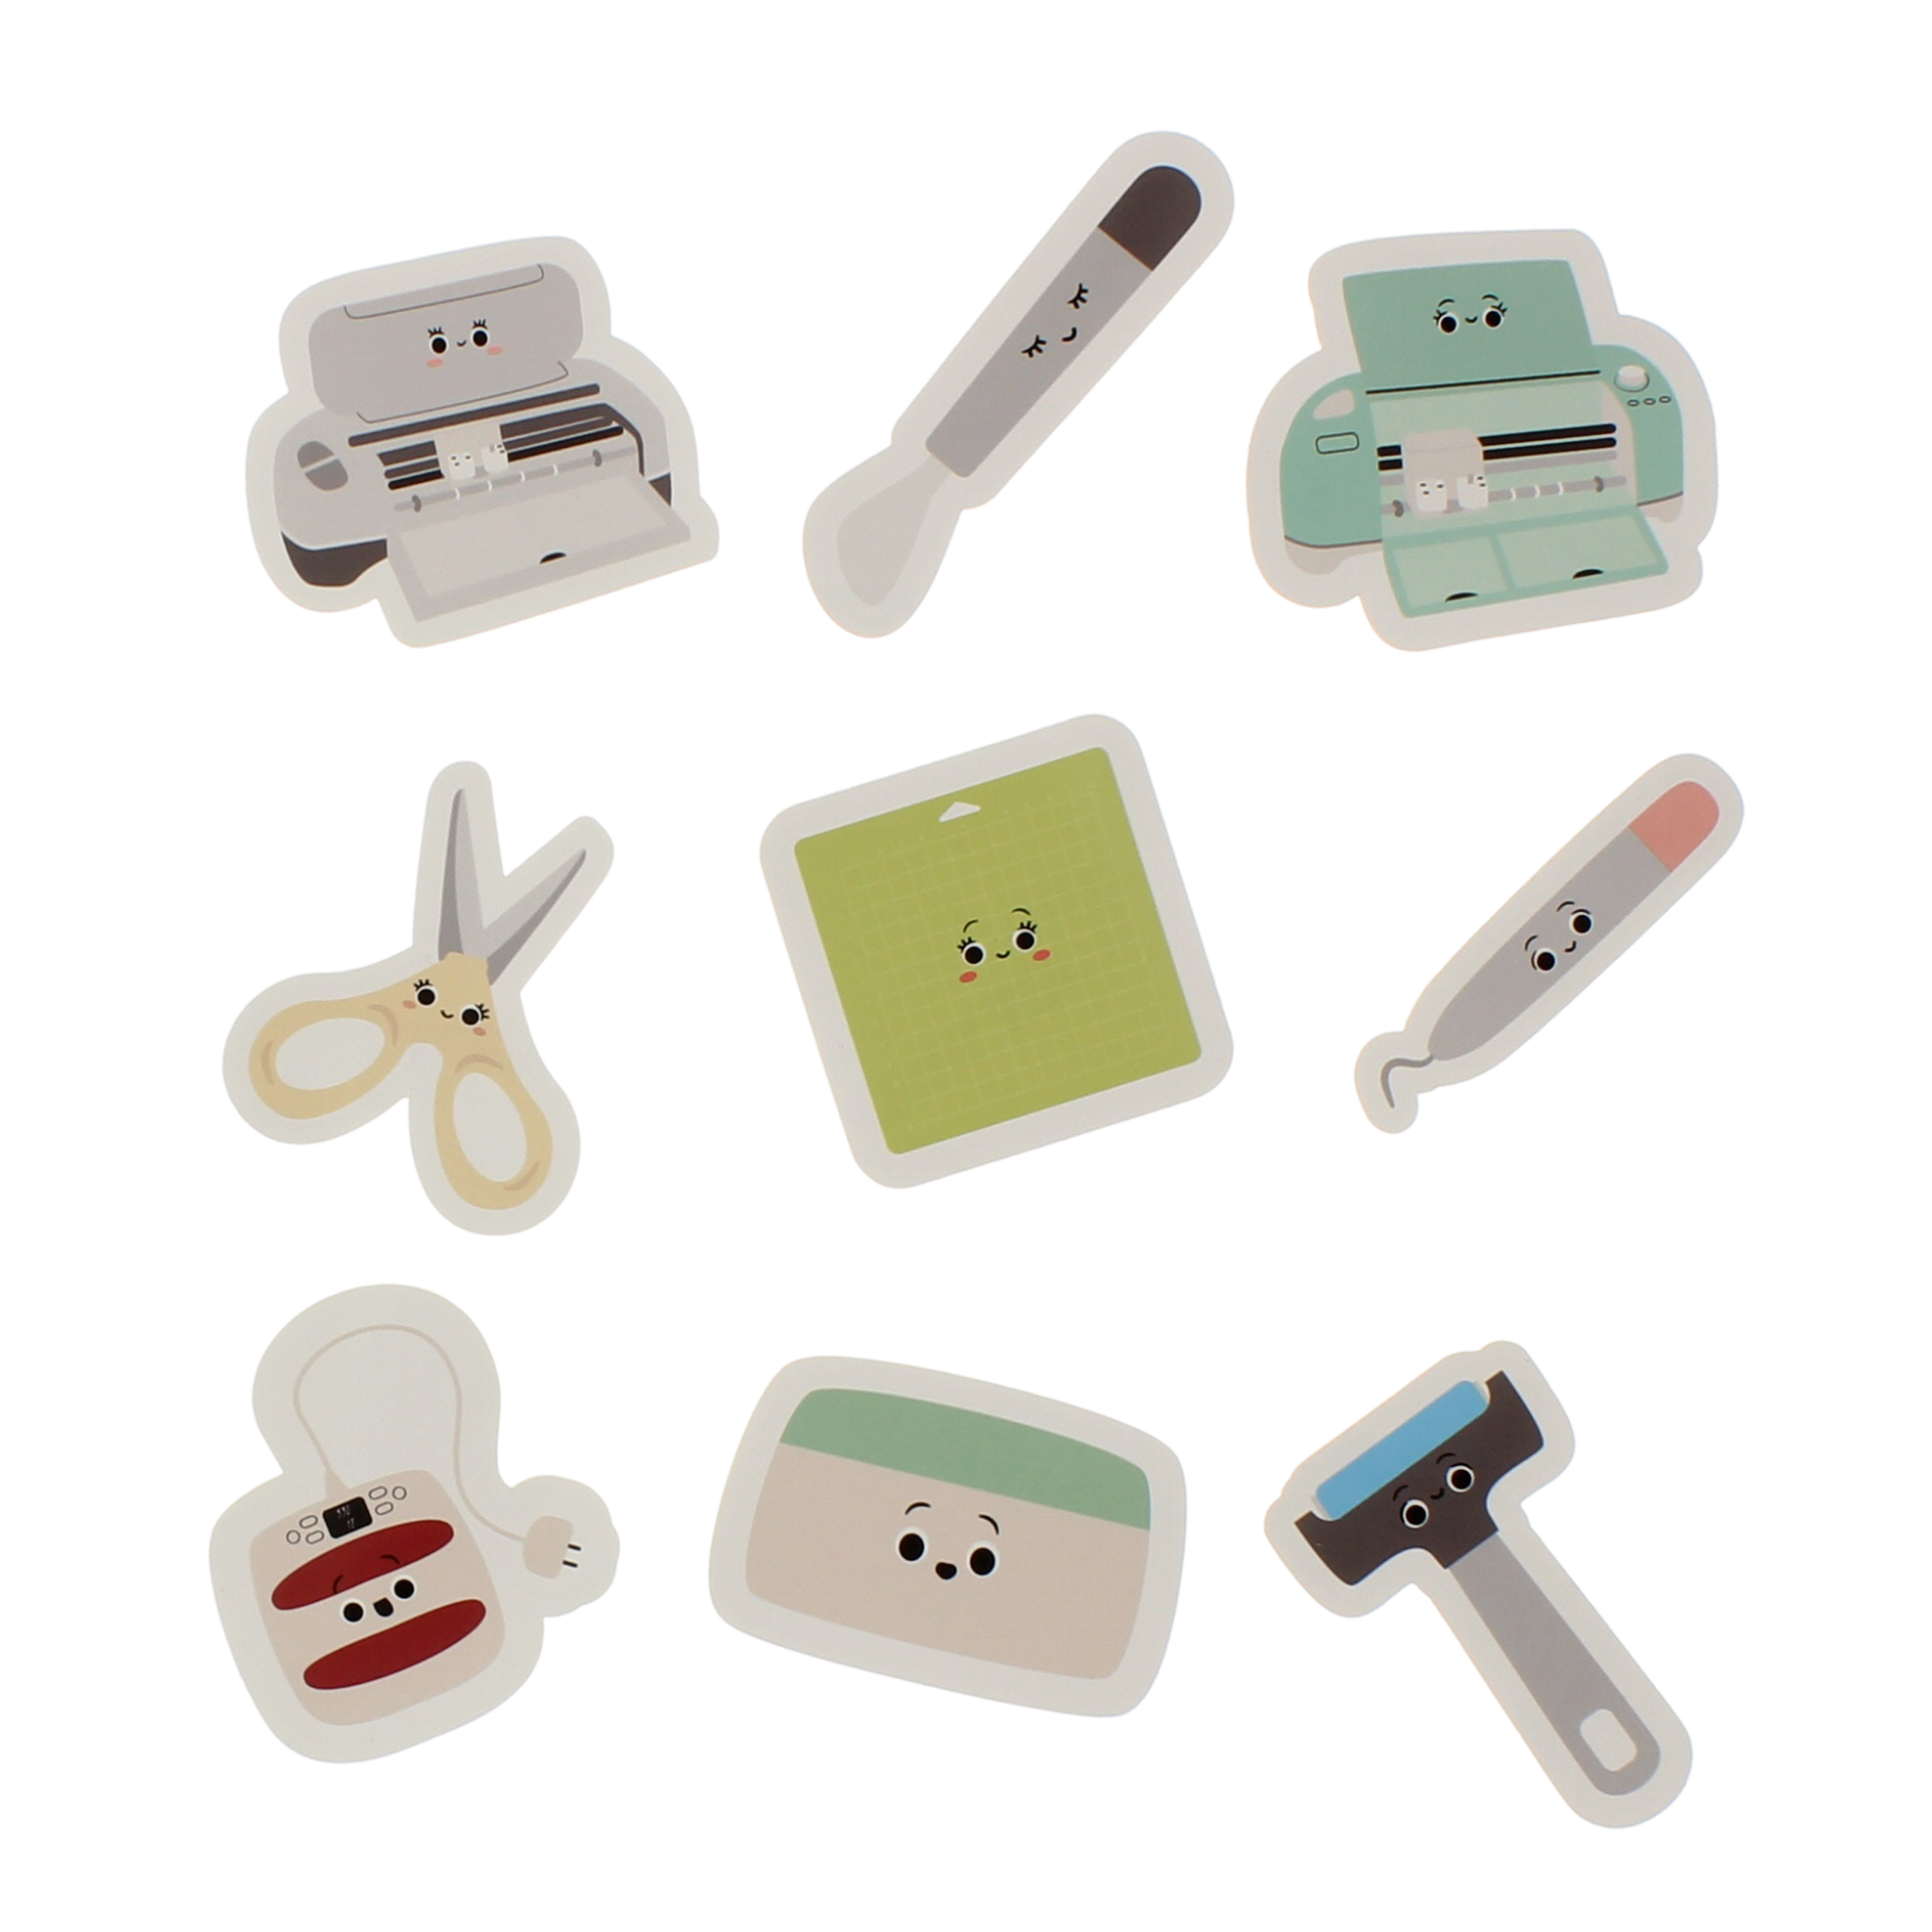 TodoBlanks 'Cute Tools' Sticker Set